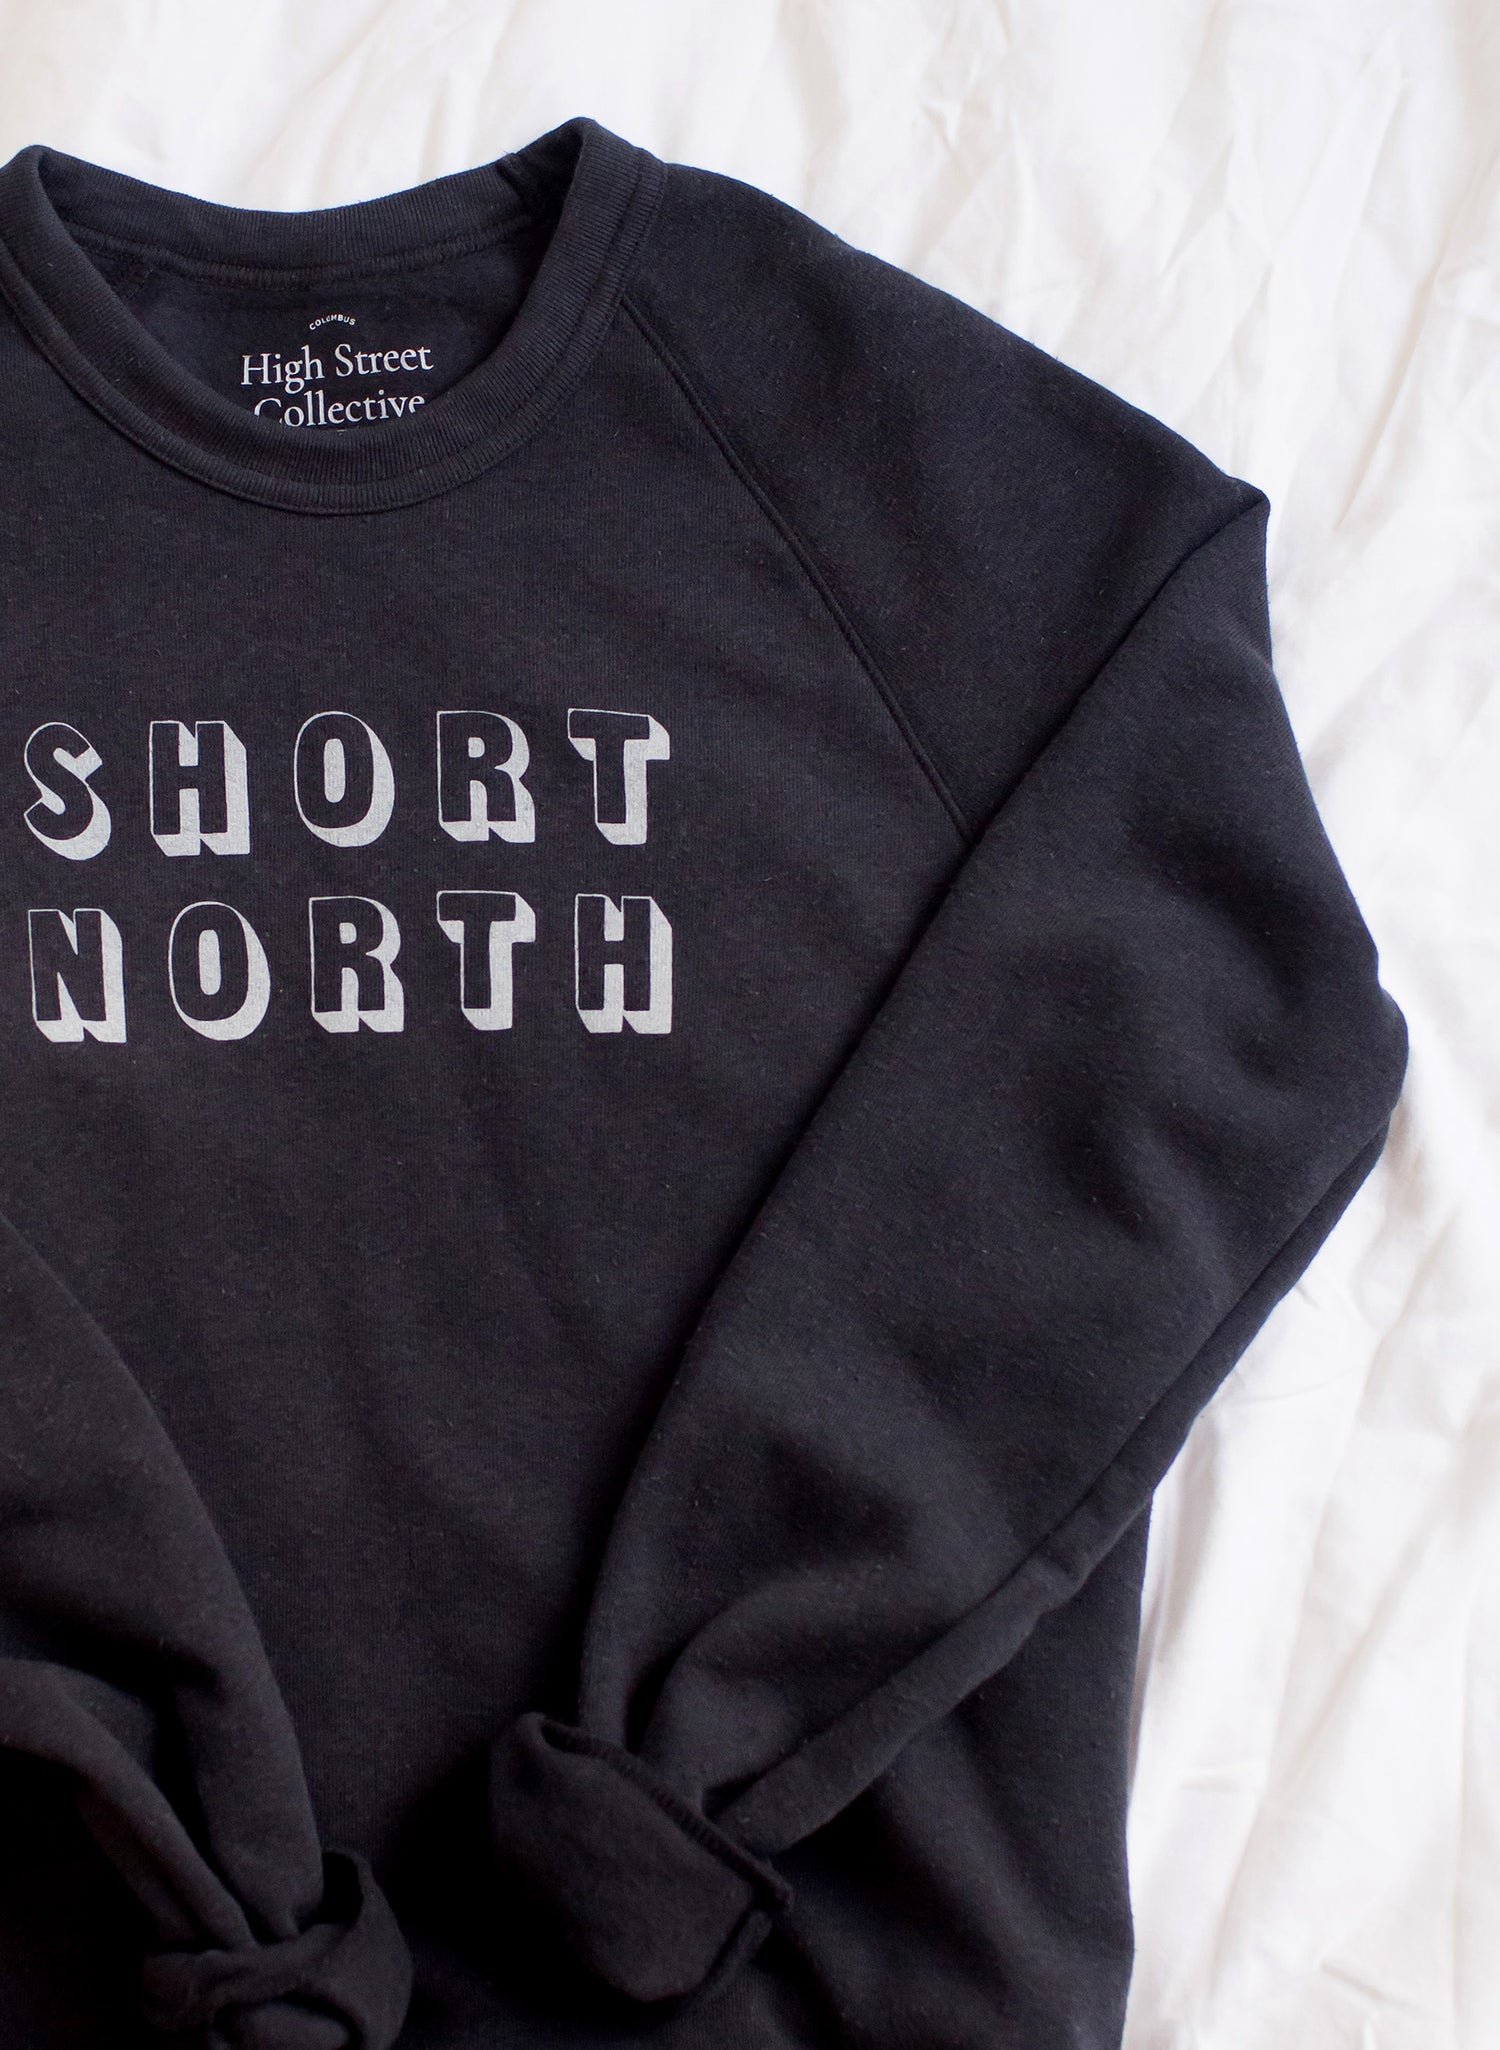 Black crewneck sweatshirt with Short North graphic in white.